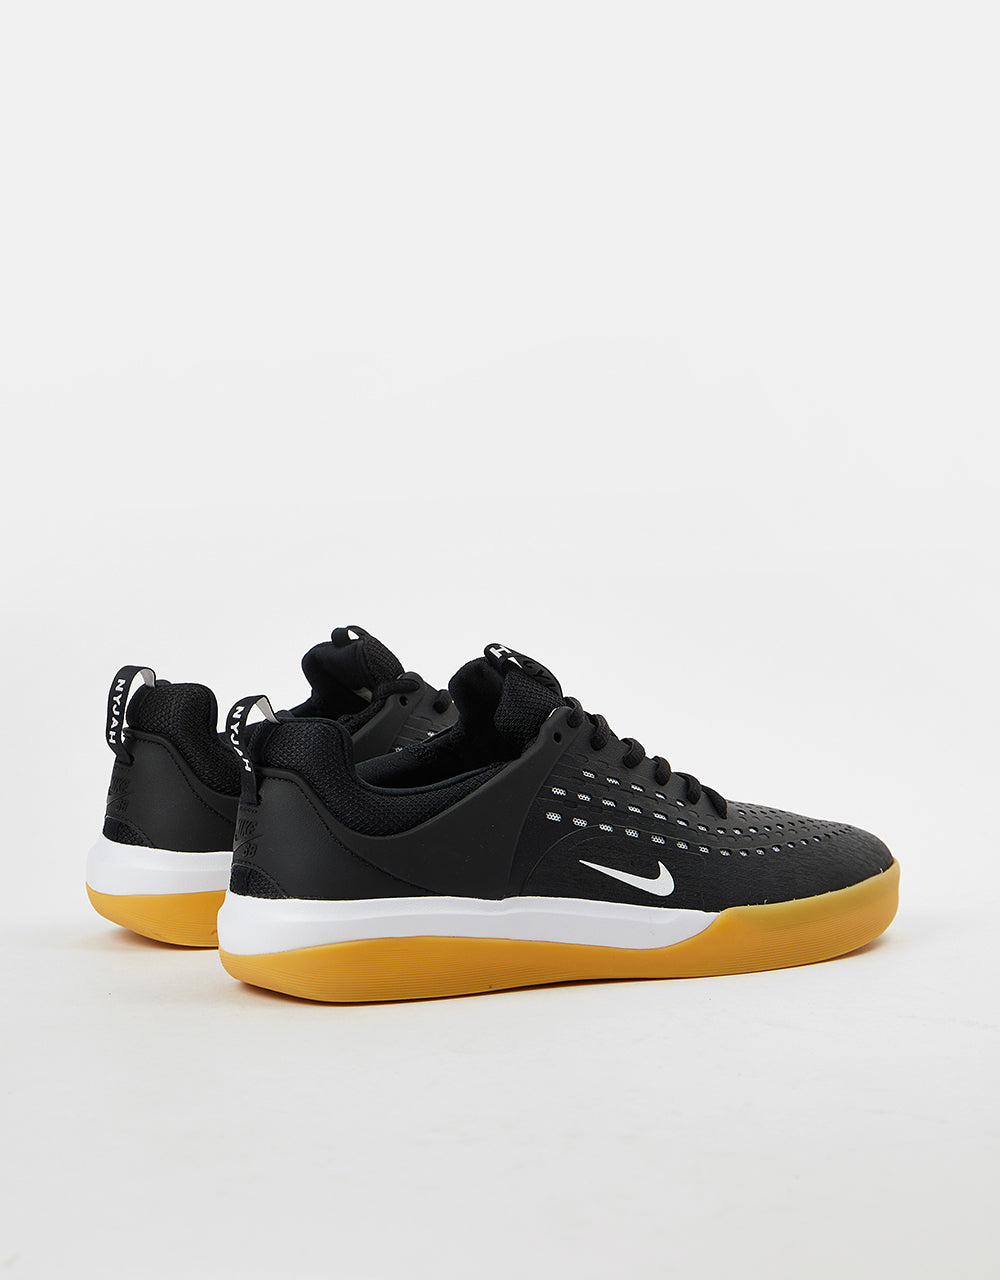 Nike SB Zoom Nyjah 3 Skate Shoes - Black/White-Black-White-Gum Lt Brown